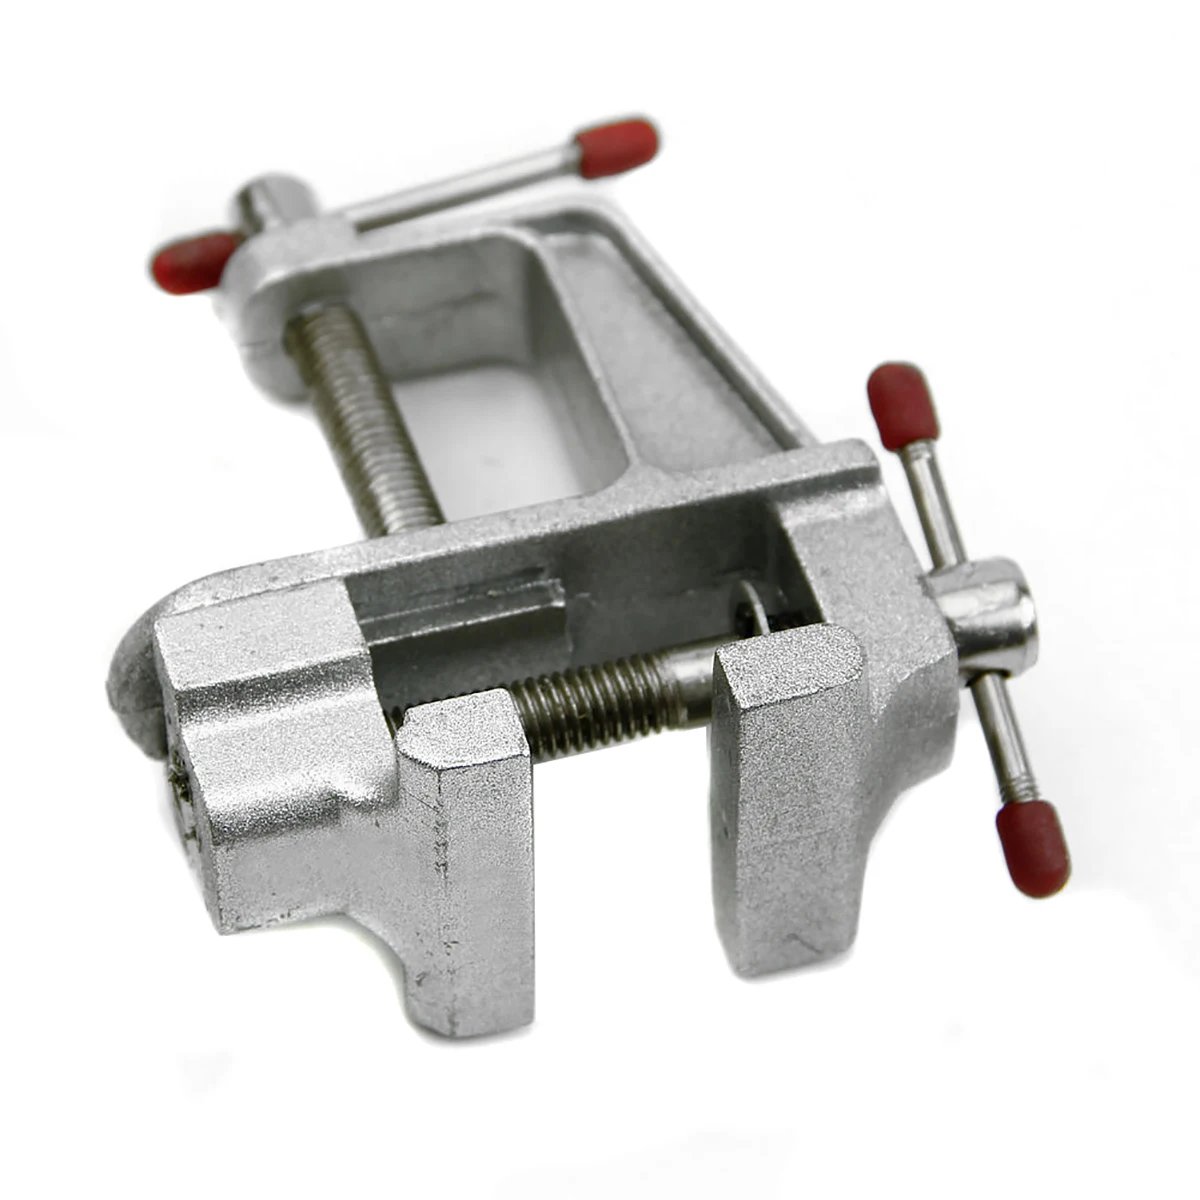 1 шт. x 3," мини алюминиевый маленький хобби ювелира зажим на стол и скамья инструмент тиски